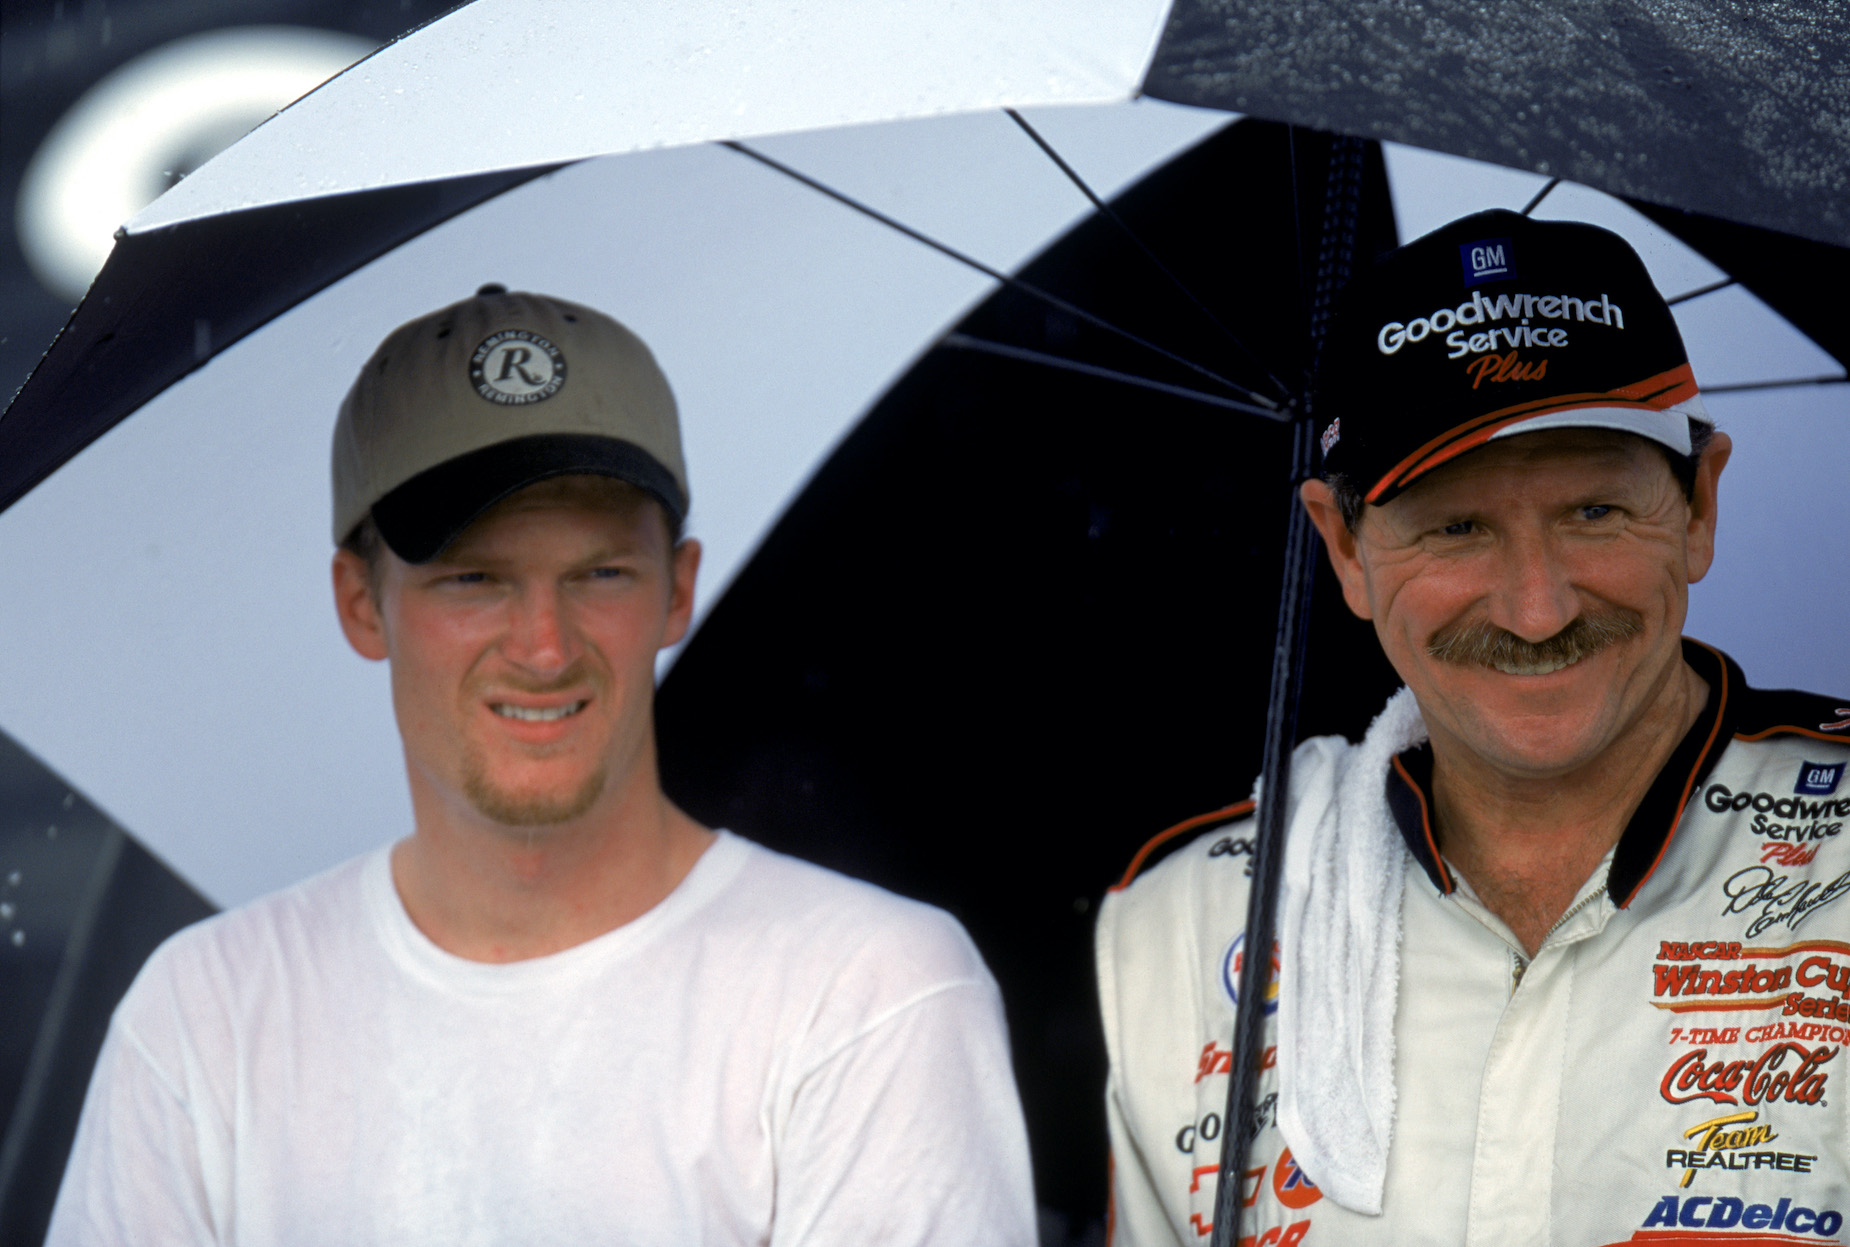 Dale Earnhardt and Dale Earnhardt Jr. stand under an umbrella at Darlington Raceway.